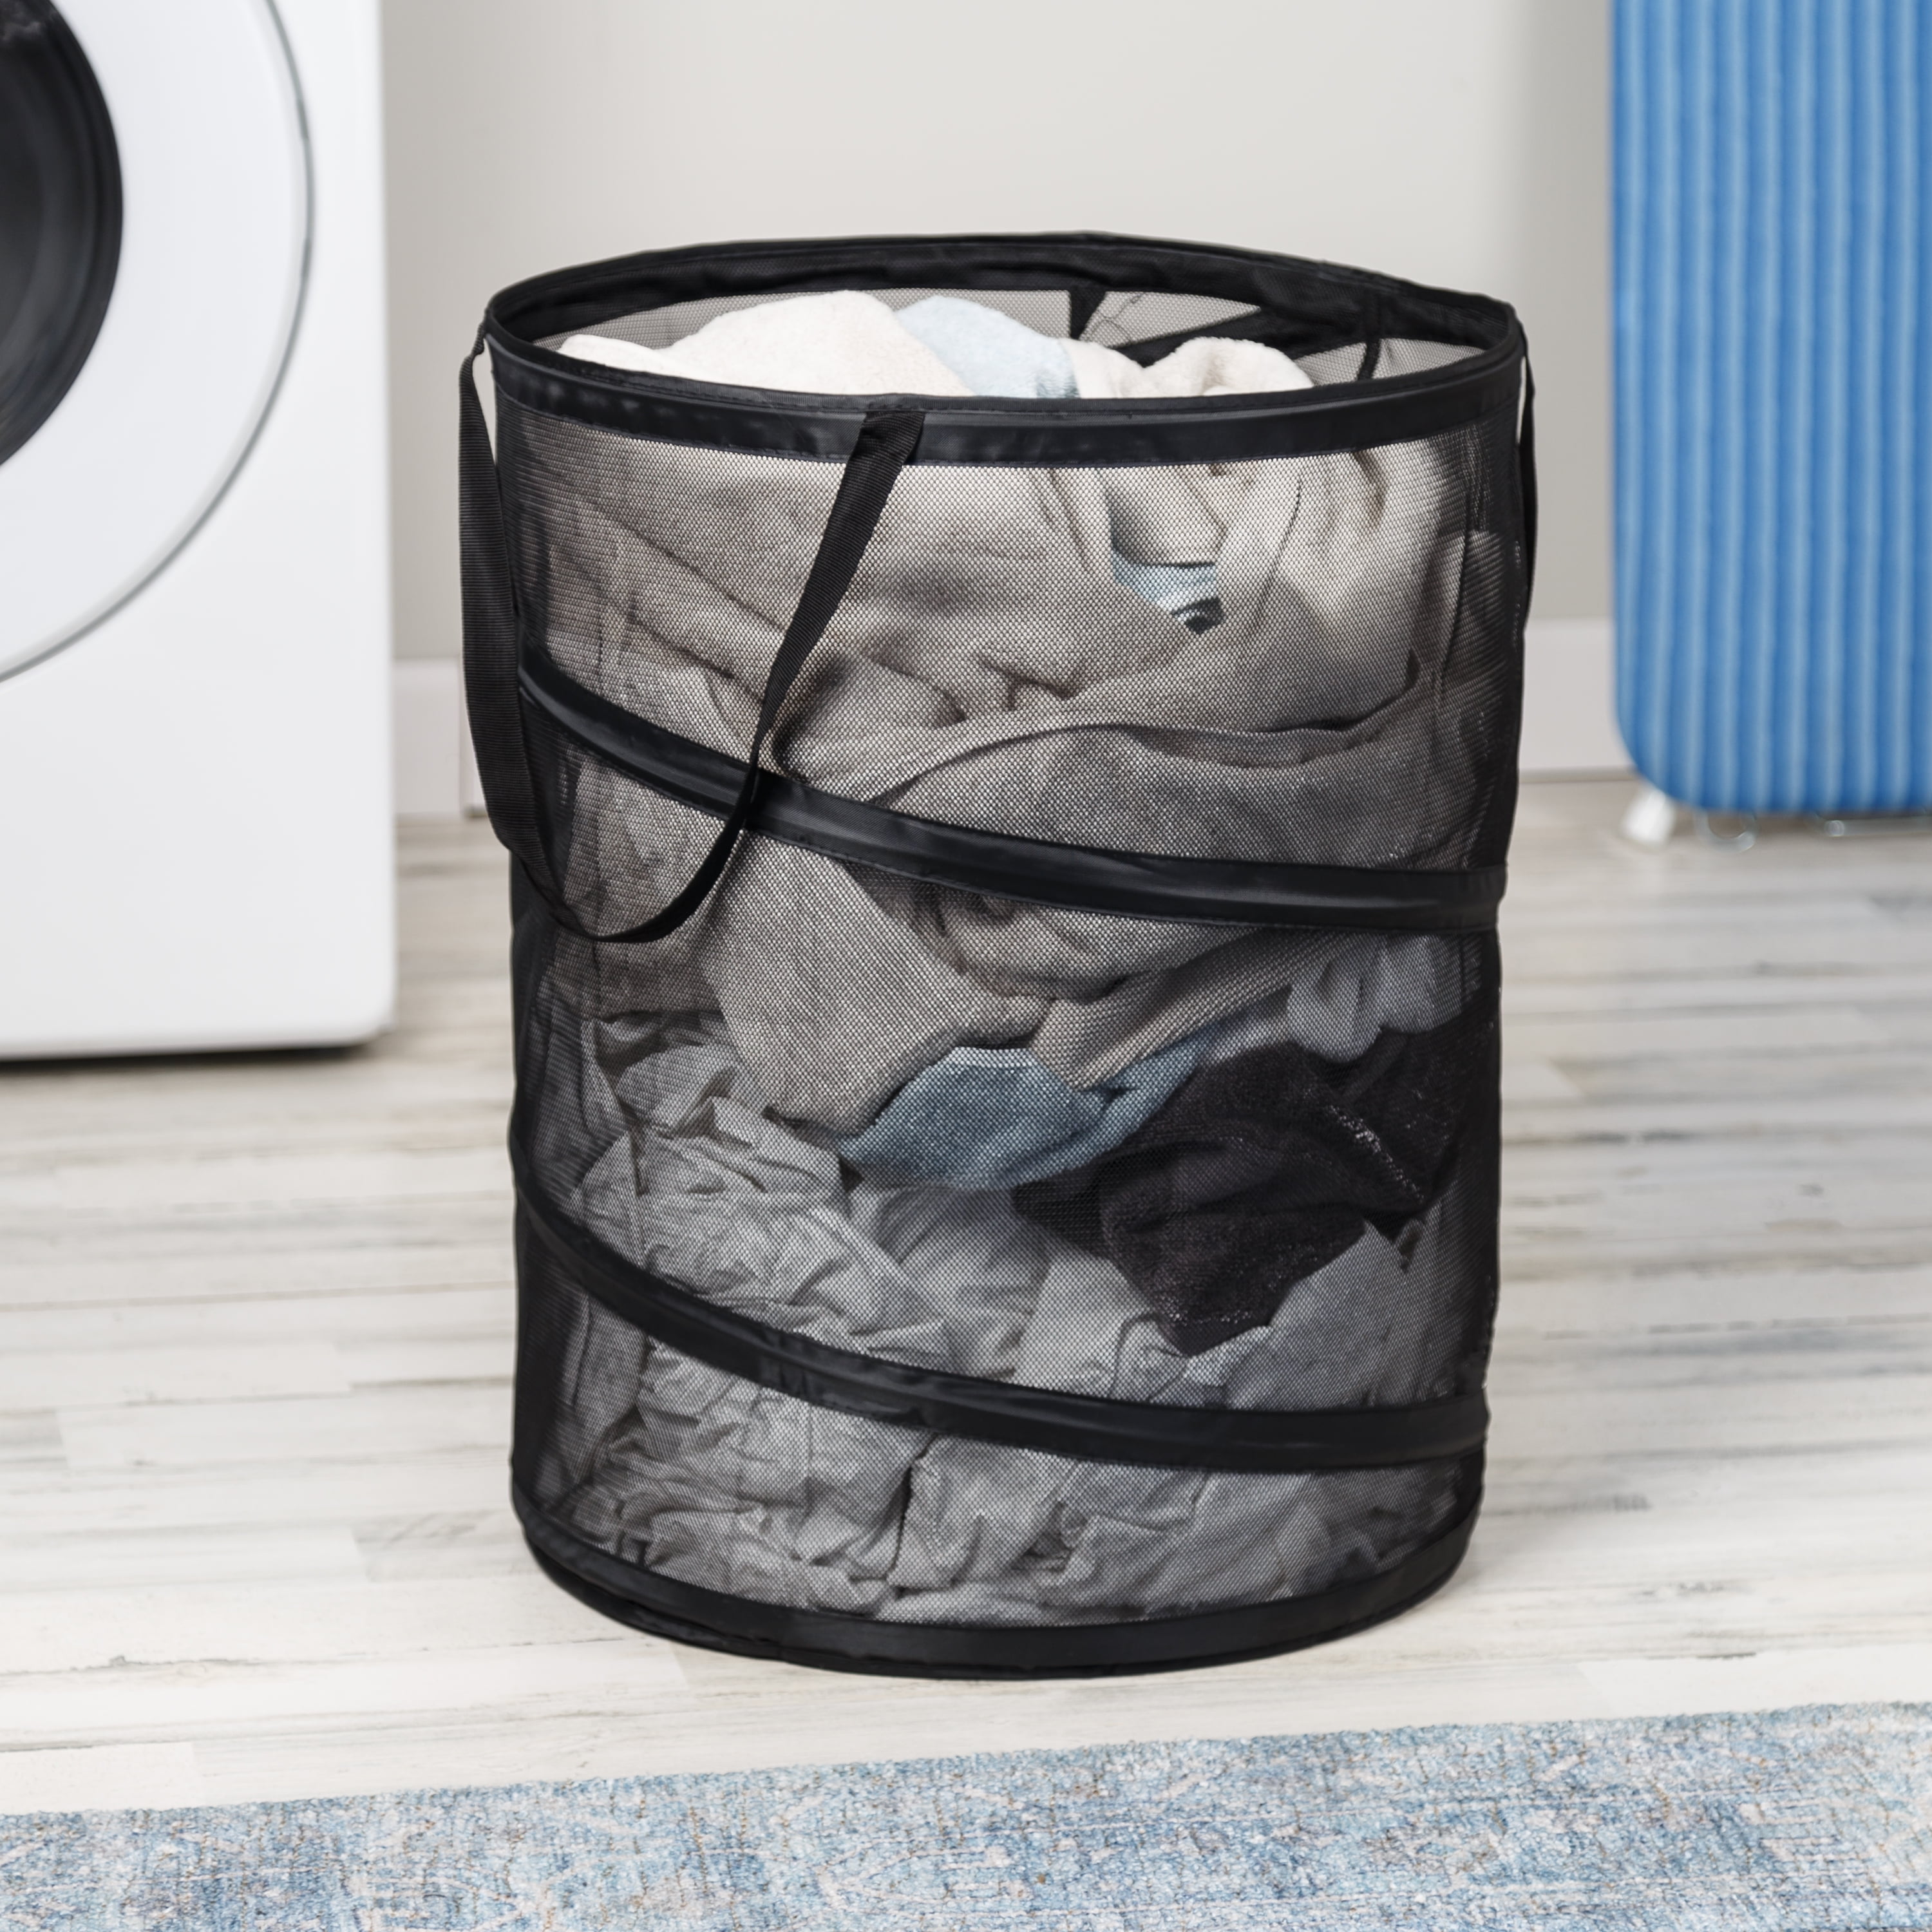 Whitmor Triple Mesh Bag Laundry Sorter, Clear and Blue - Walmart